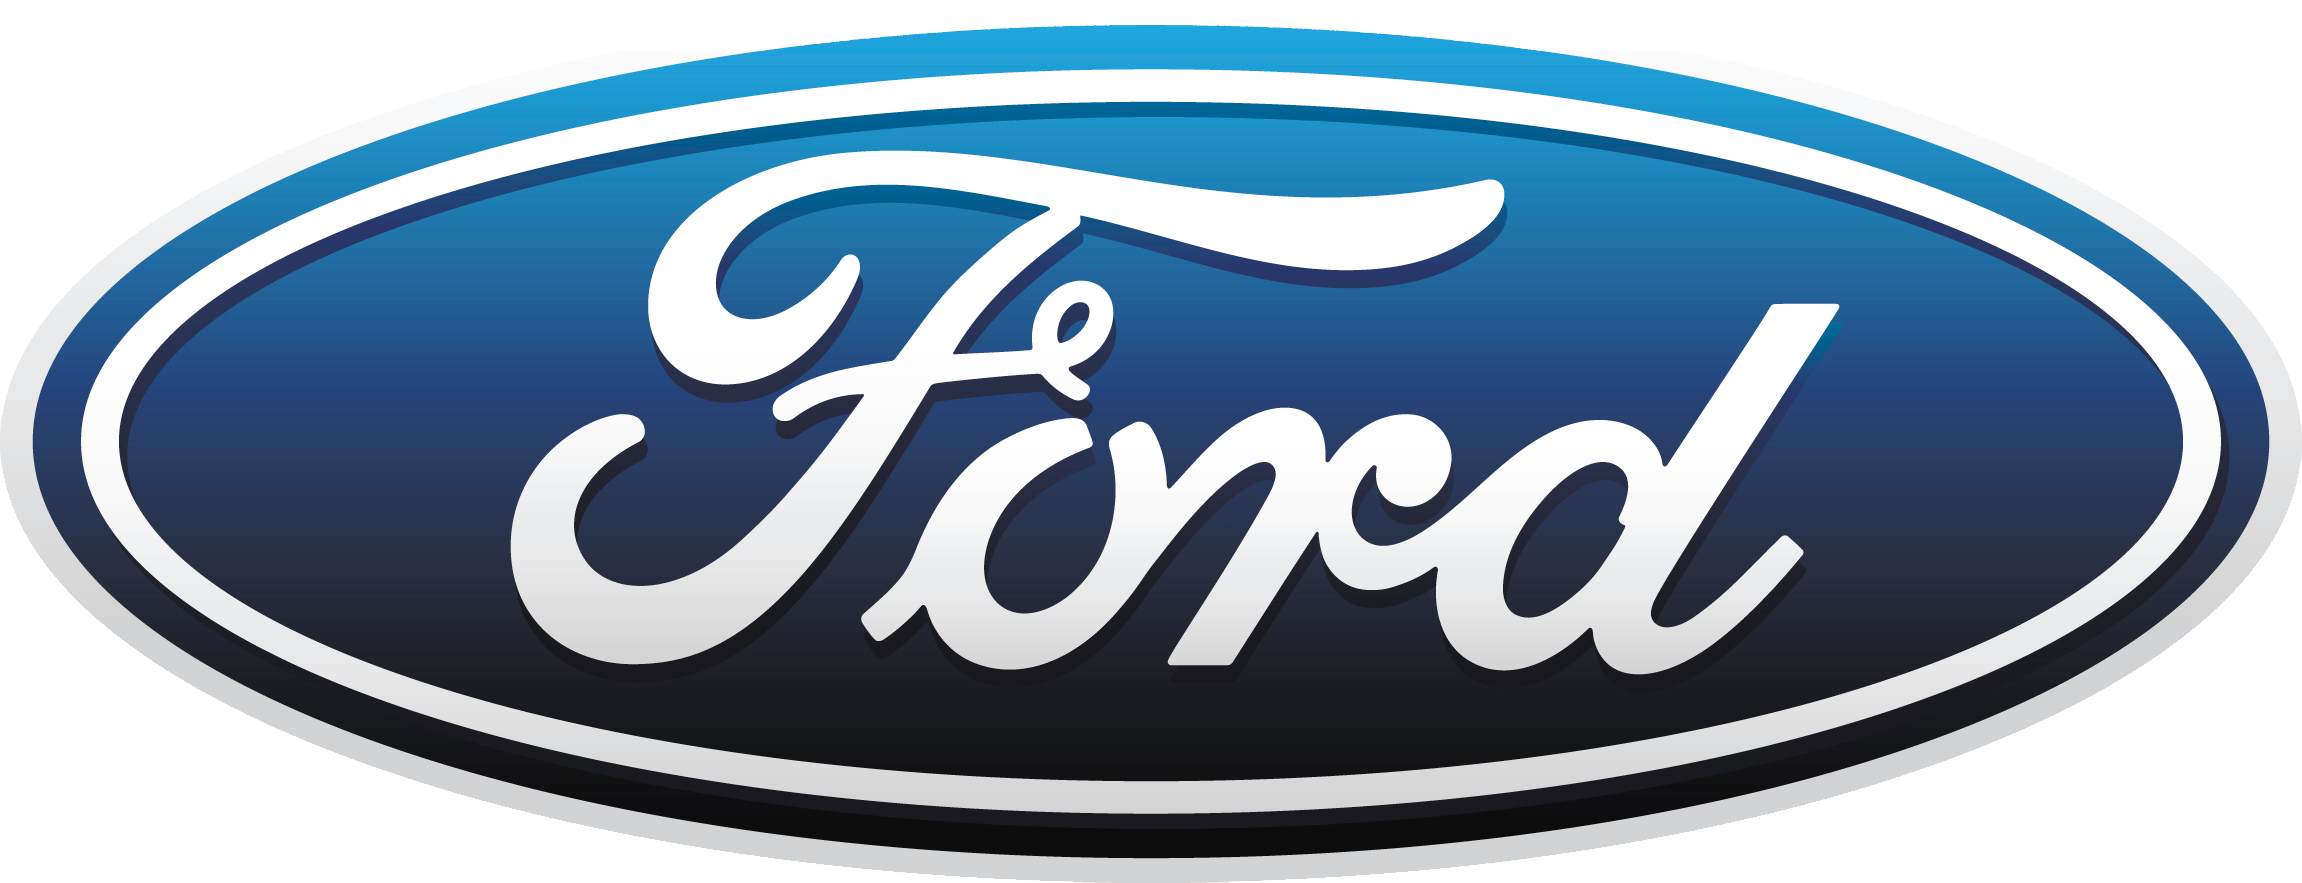 ford logo1 - Ford Logo